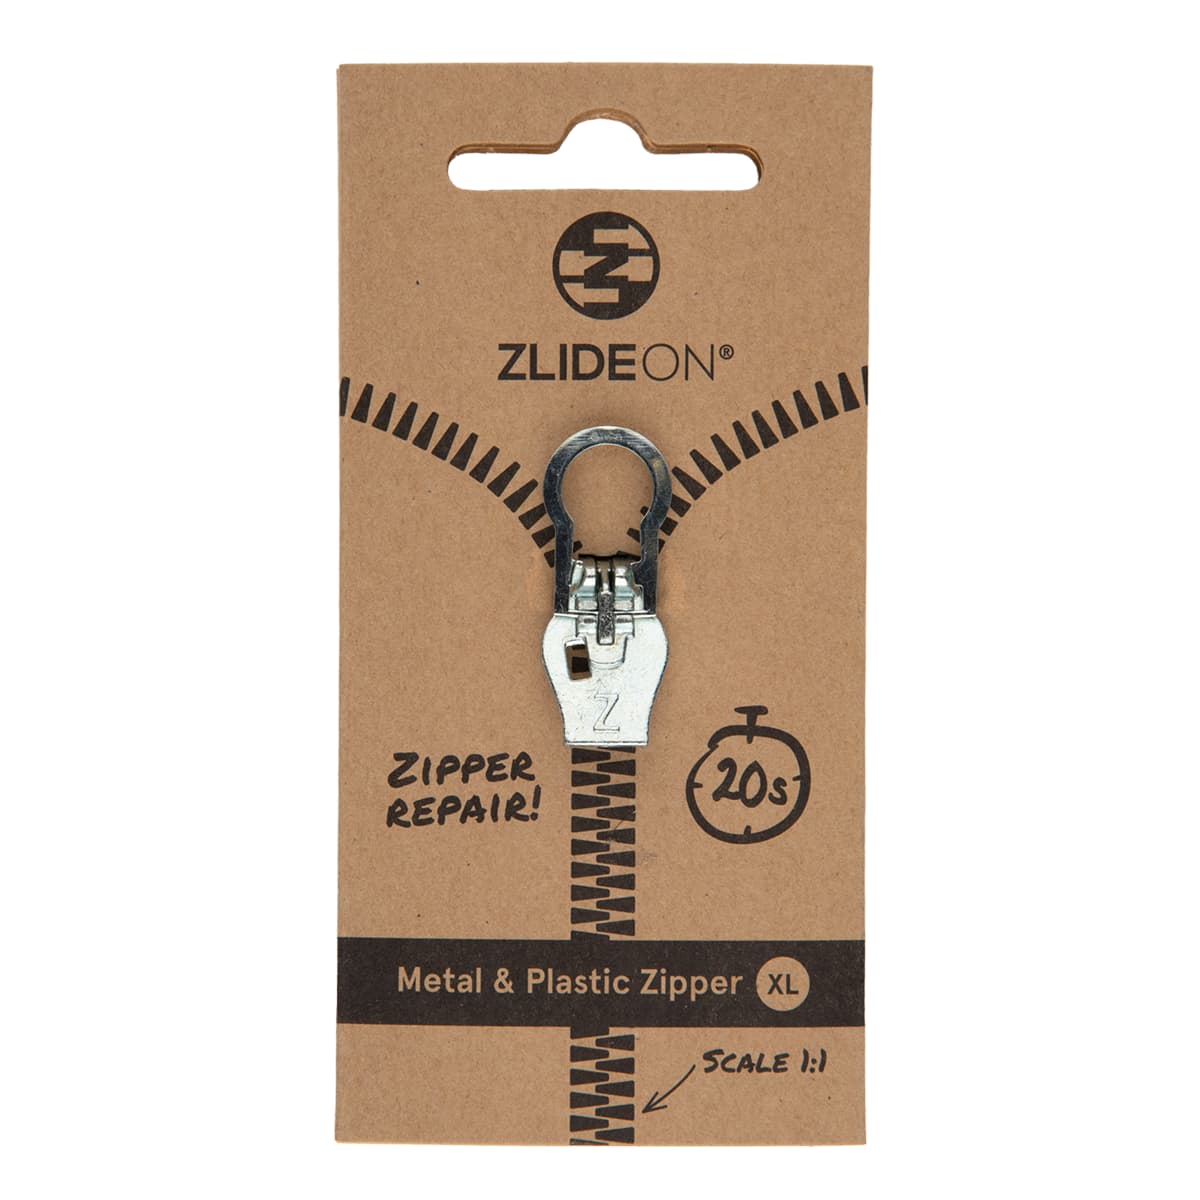 ZlideOn Metal Zipper Replacement Zipper